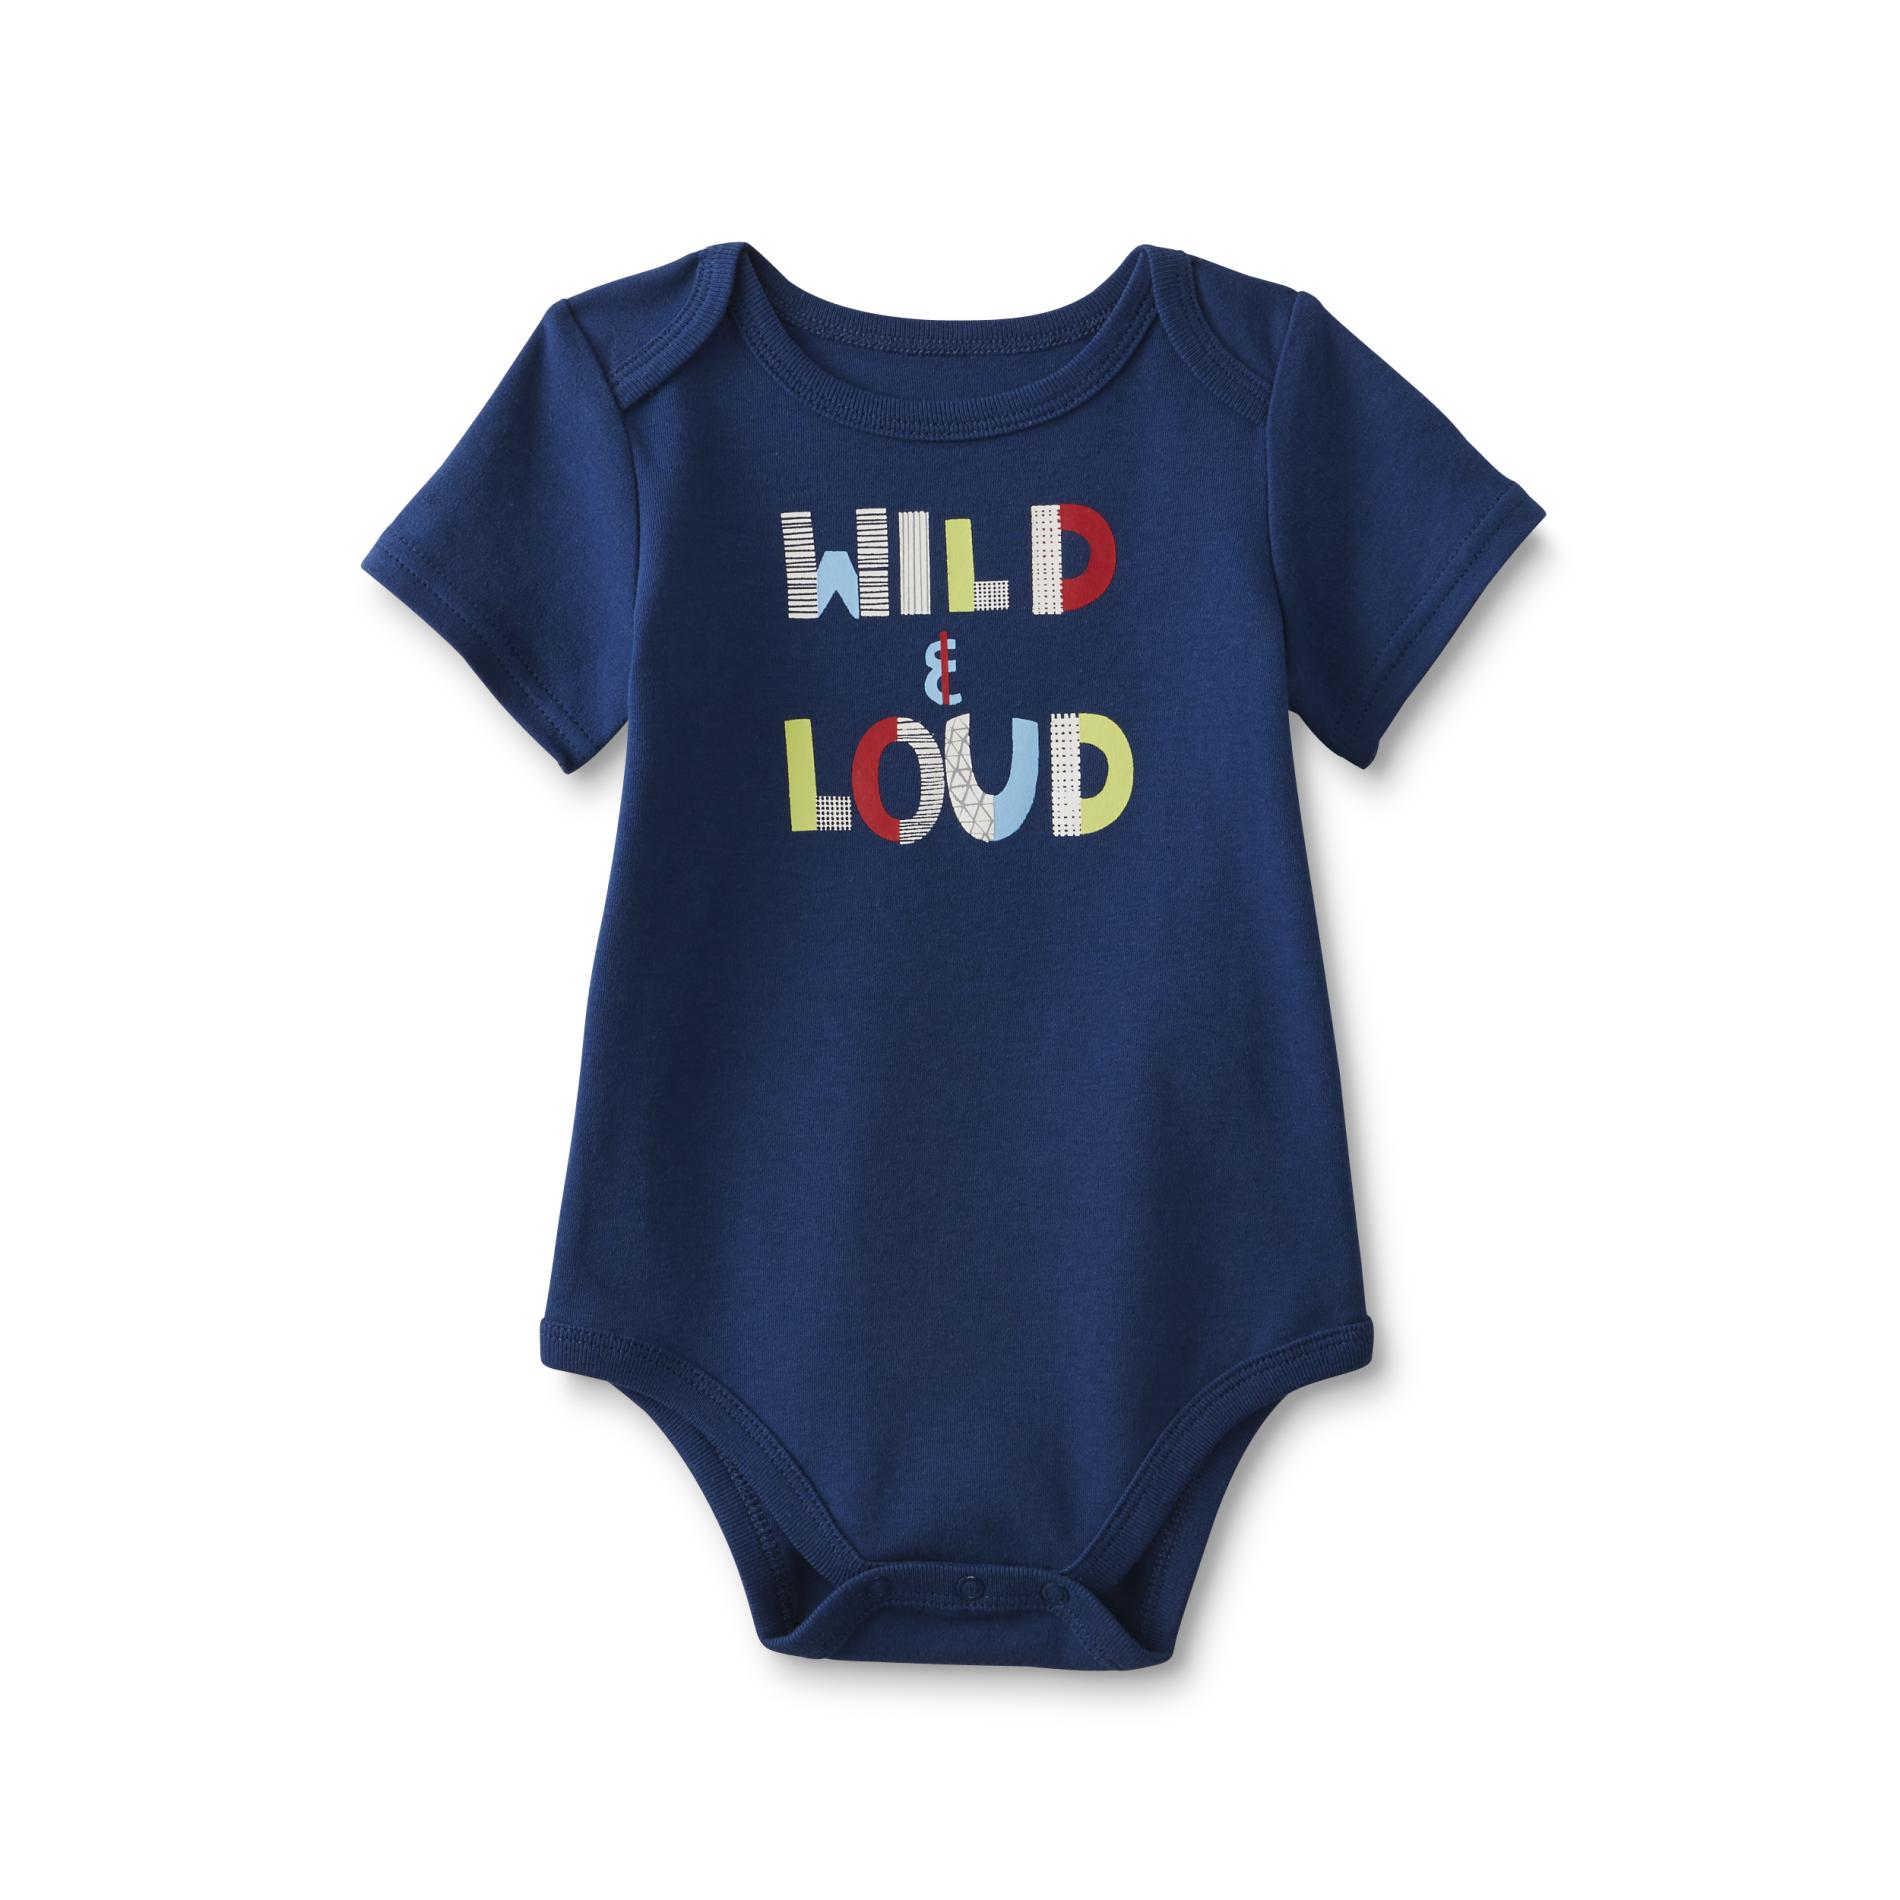 Small Wonders Newborn & Infant's Boy's Bodysuit - Wild & Loud